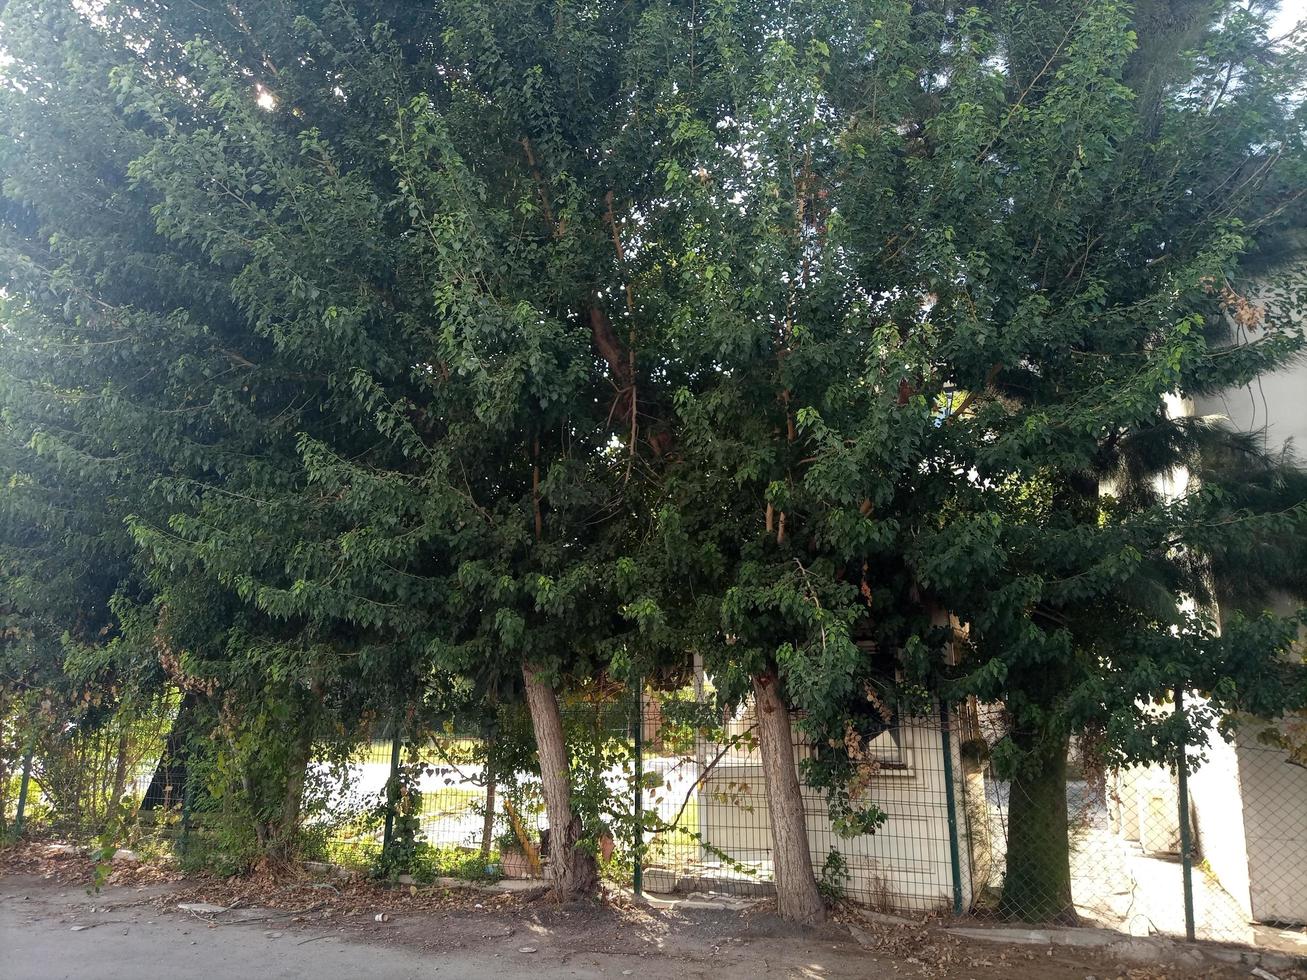 Trees on the street photo